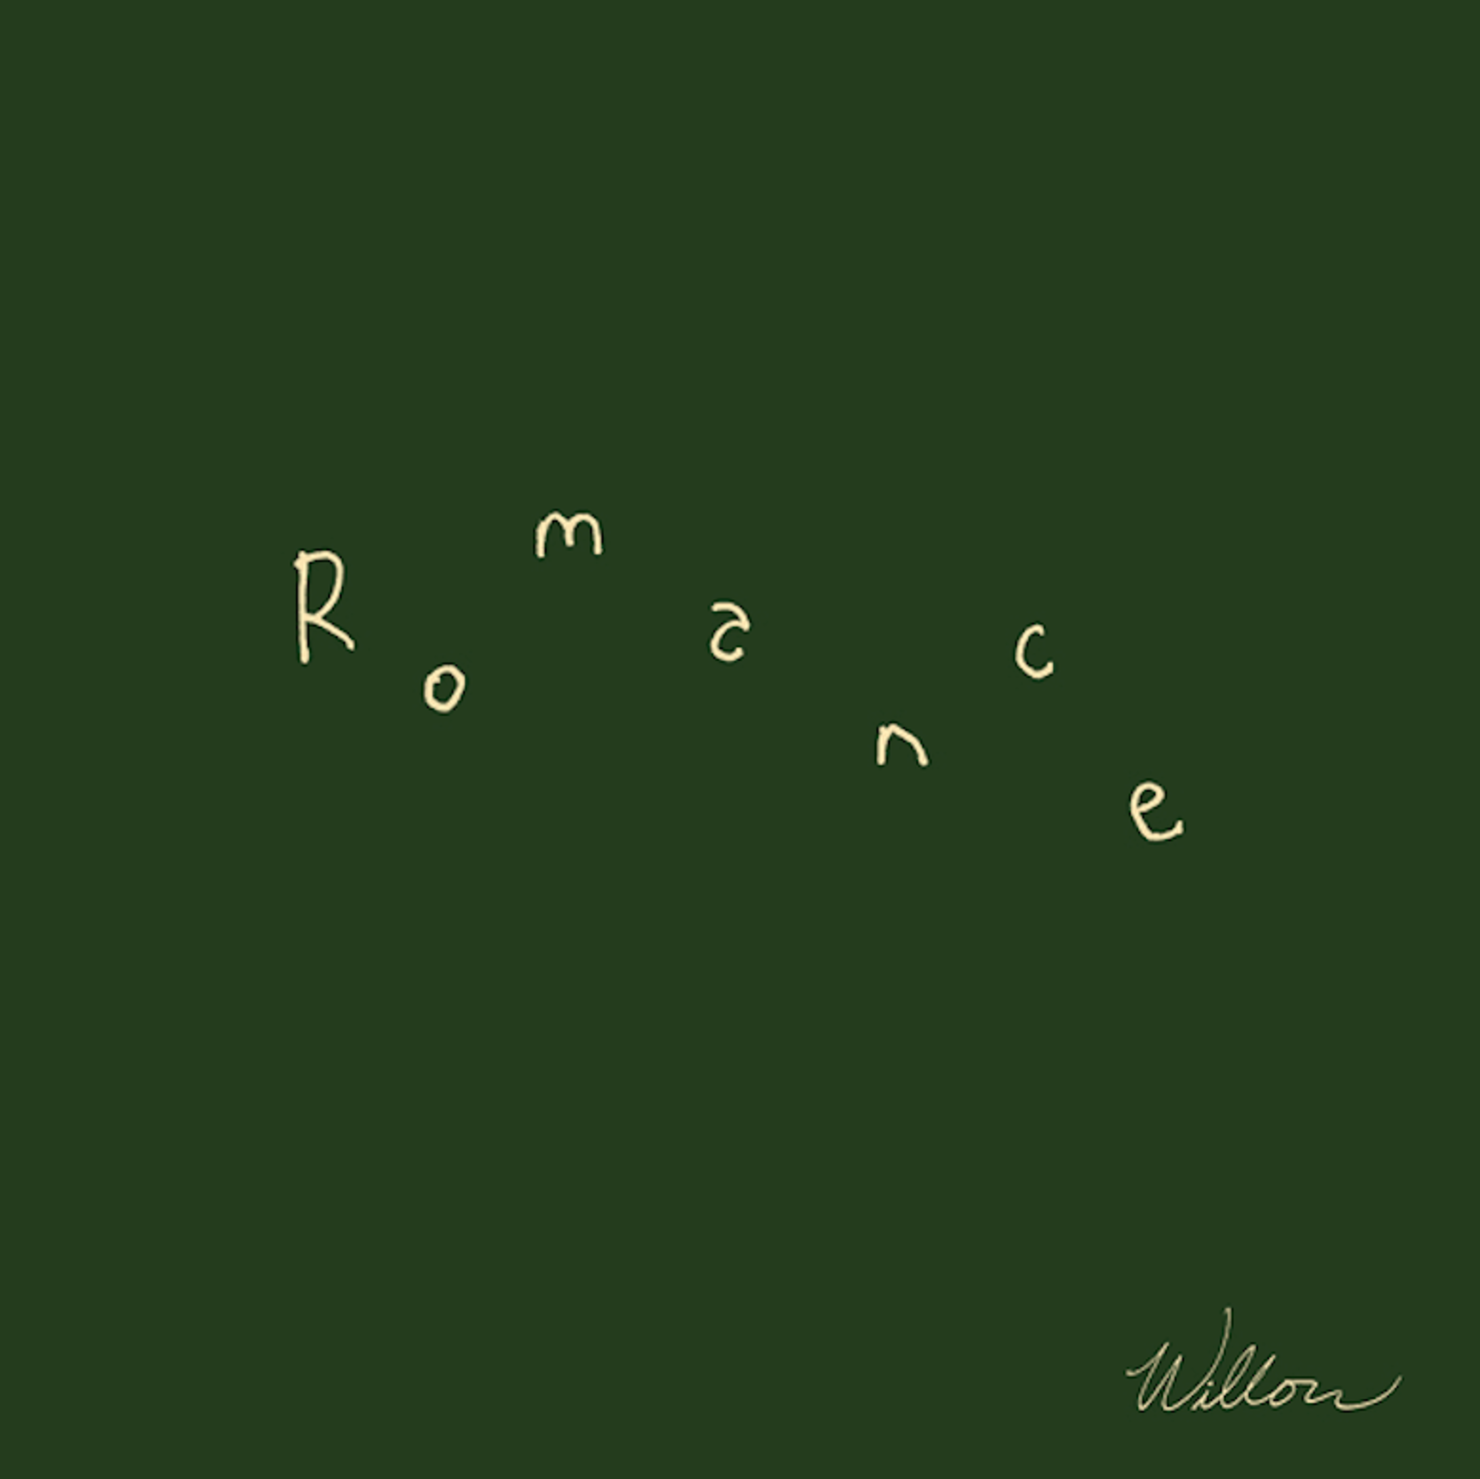 Willow Smith - 'Romance'